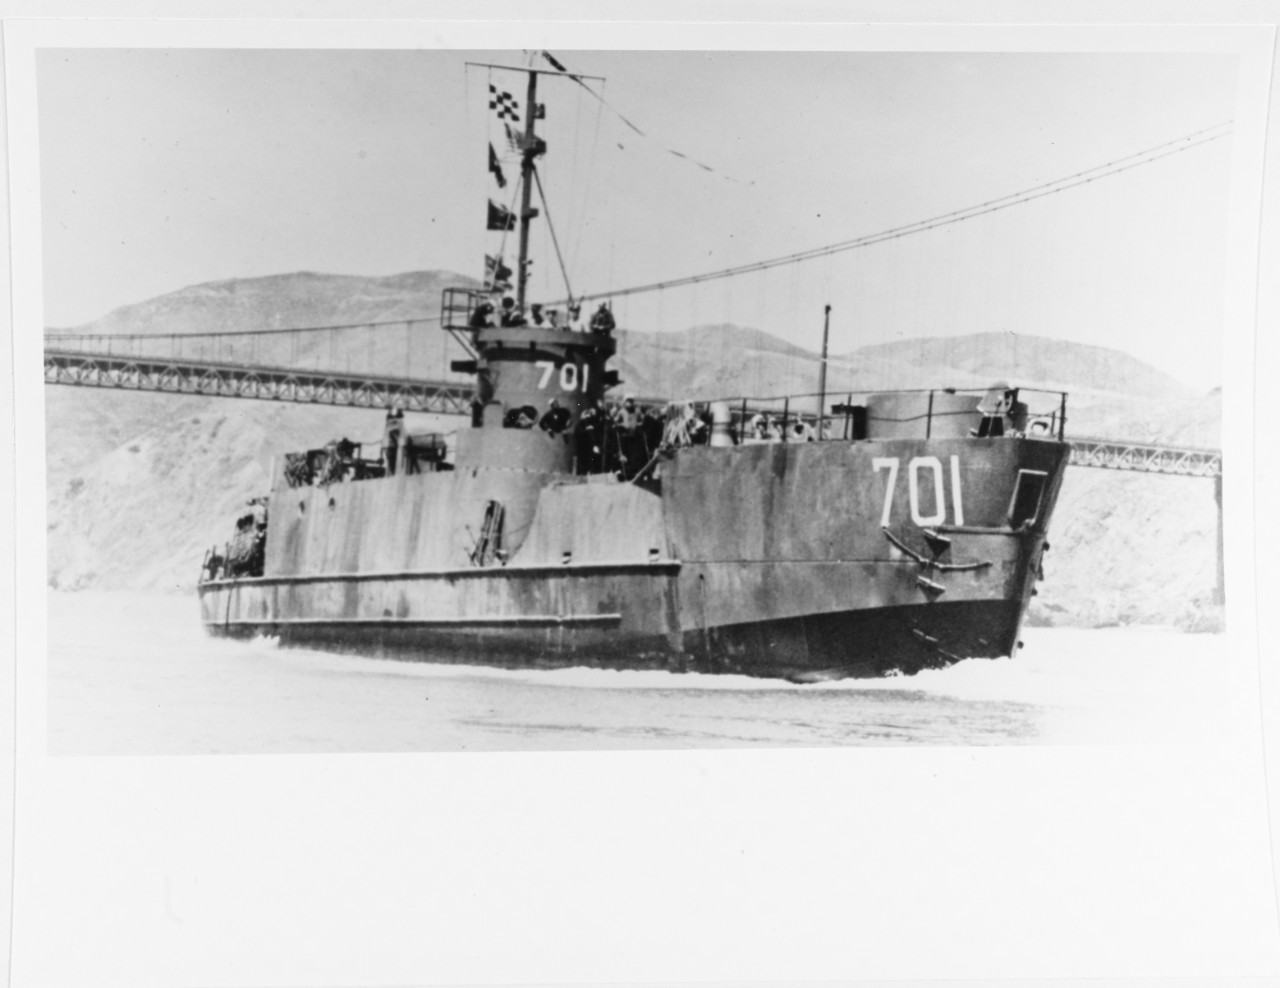 USS LCI-701